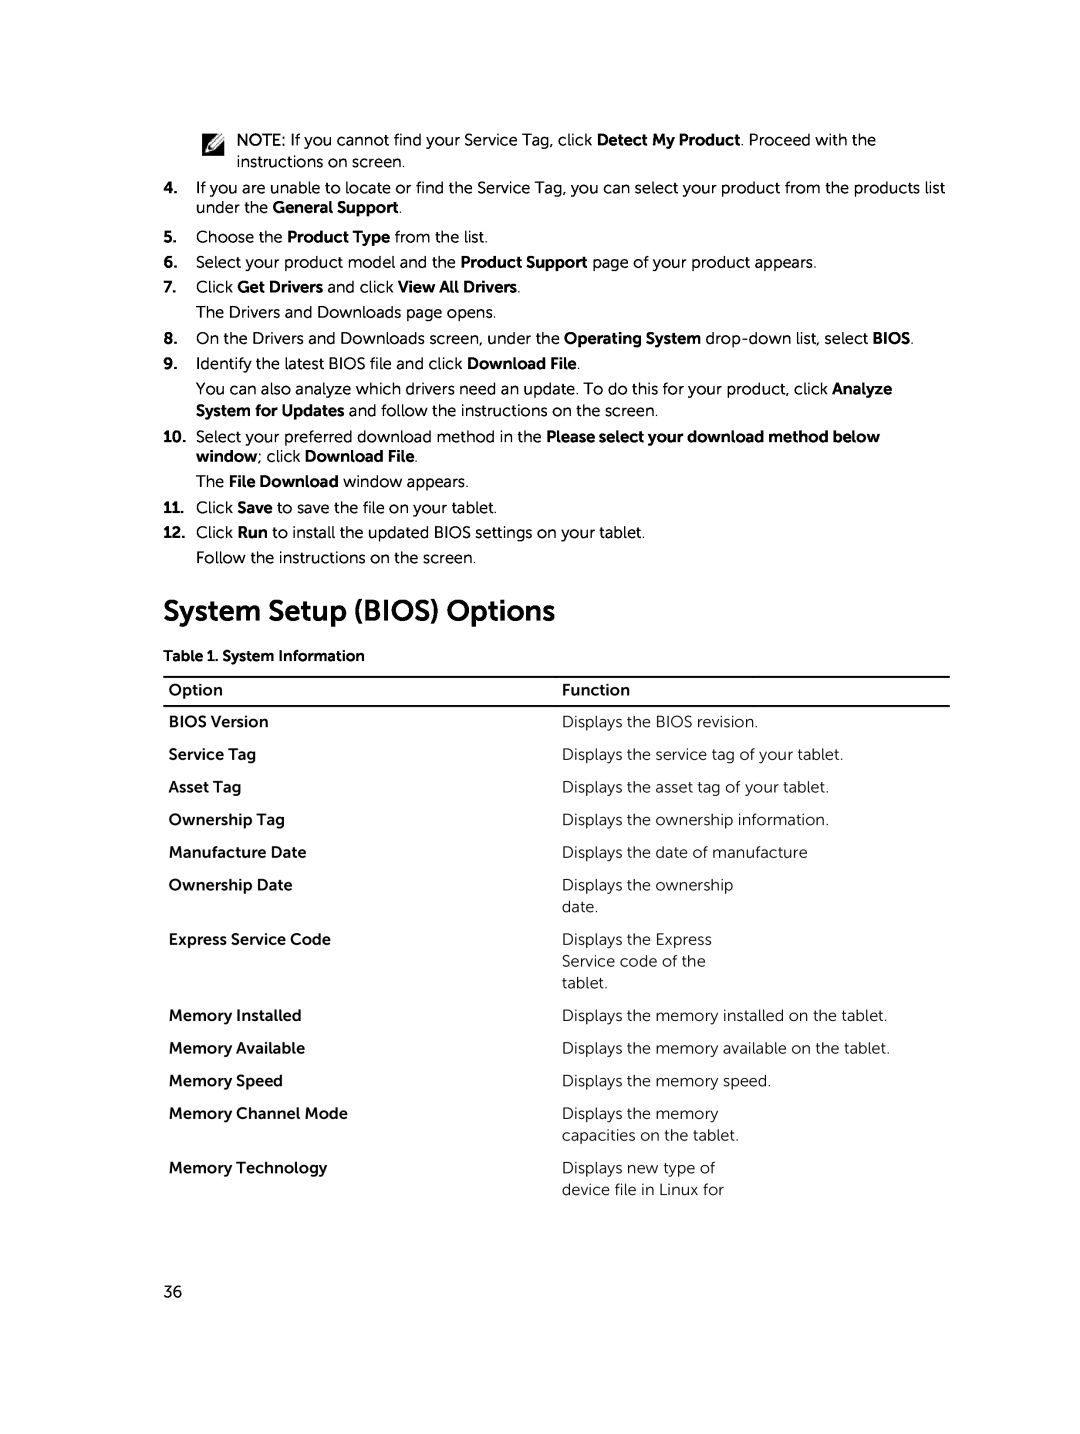 Dell 13-7350 manual System Setup BIOS Options 